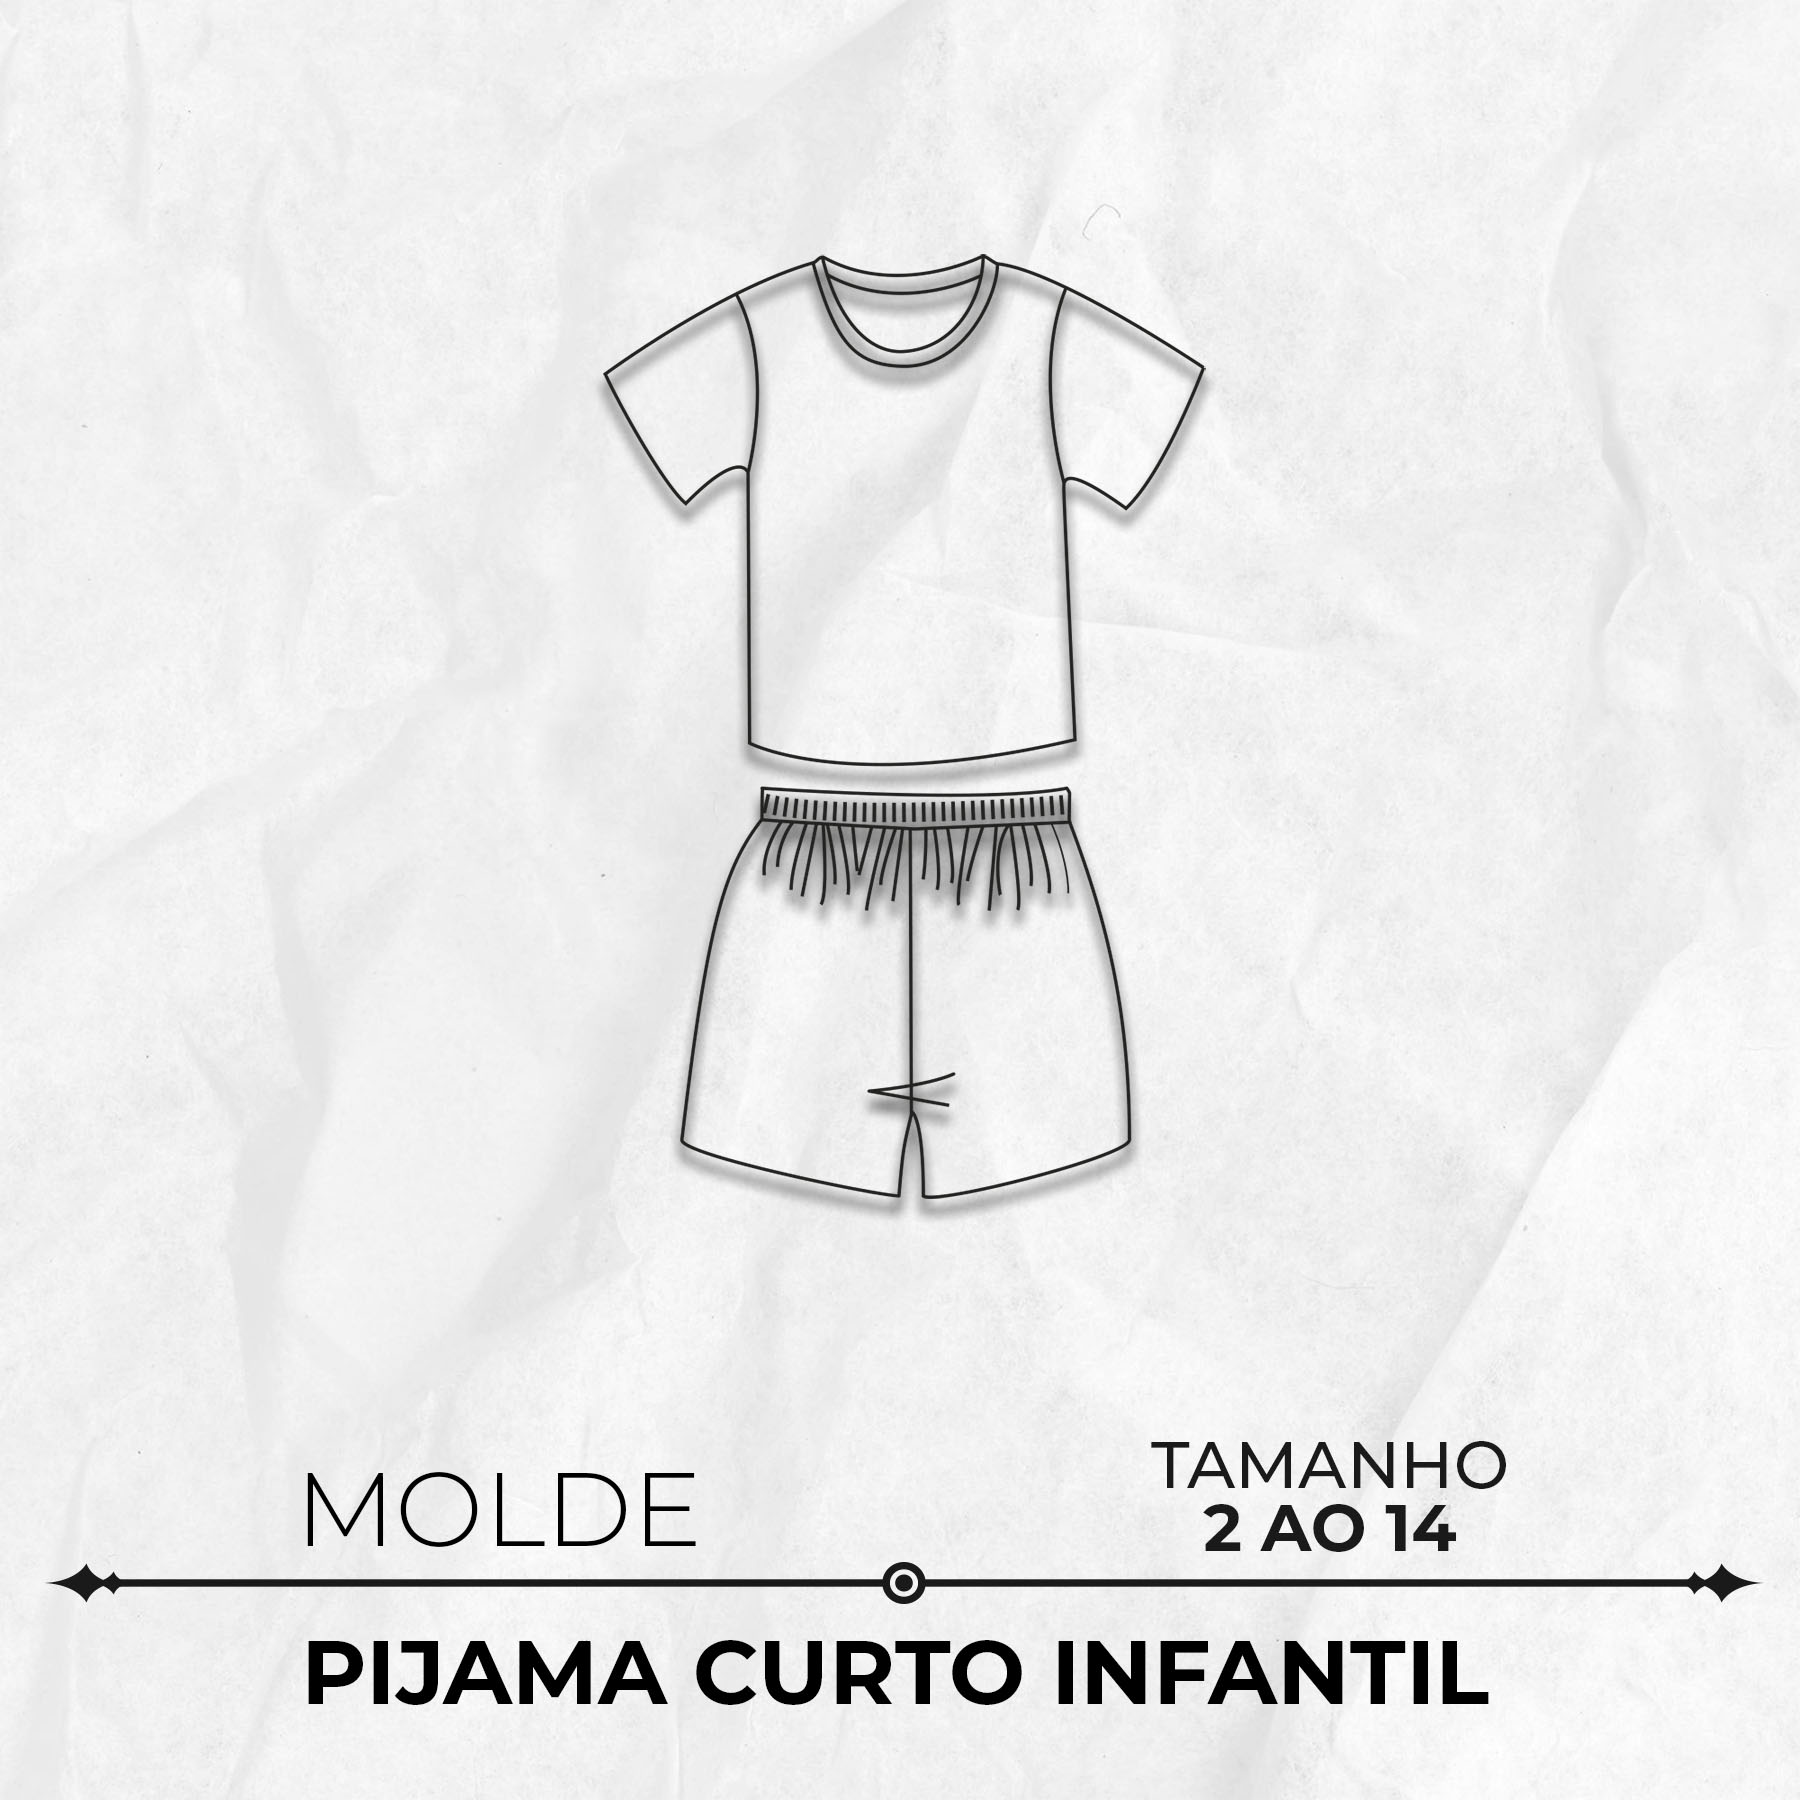 Molde pijama curto infantil tamanho 2 ao 14 by Marlene Mukai